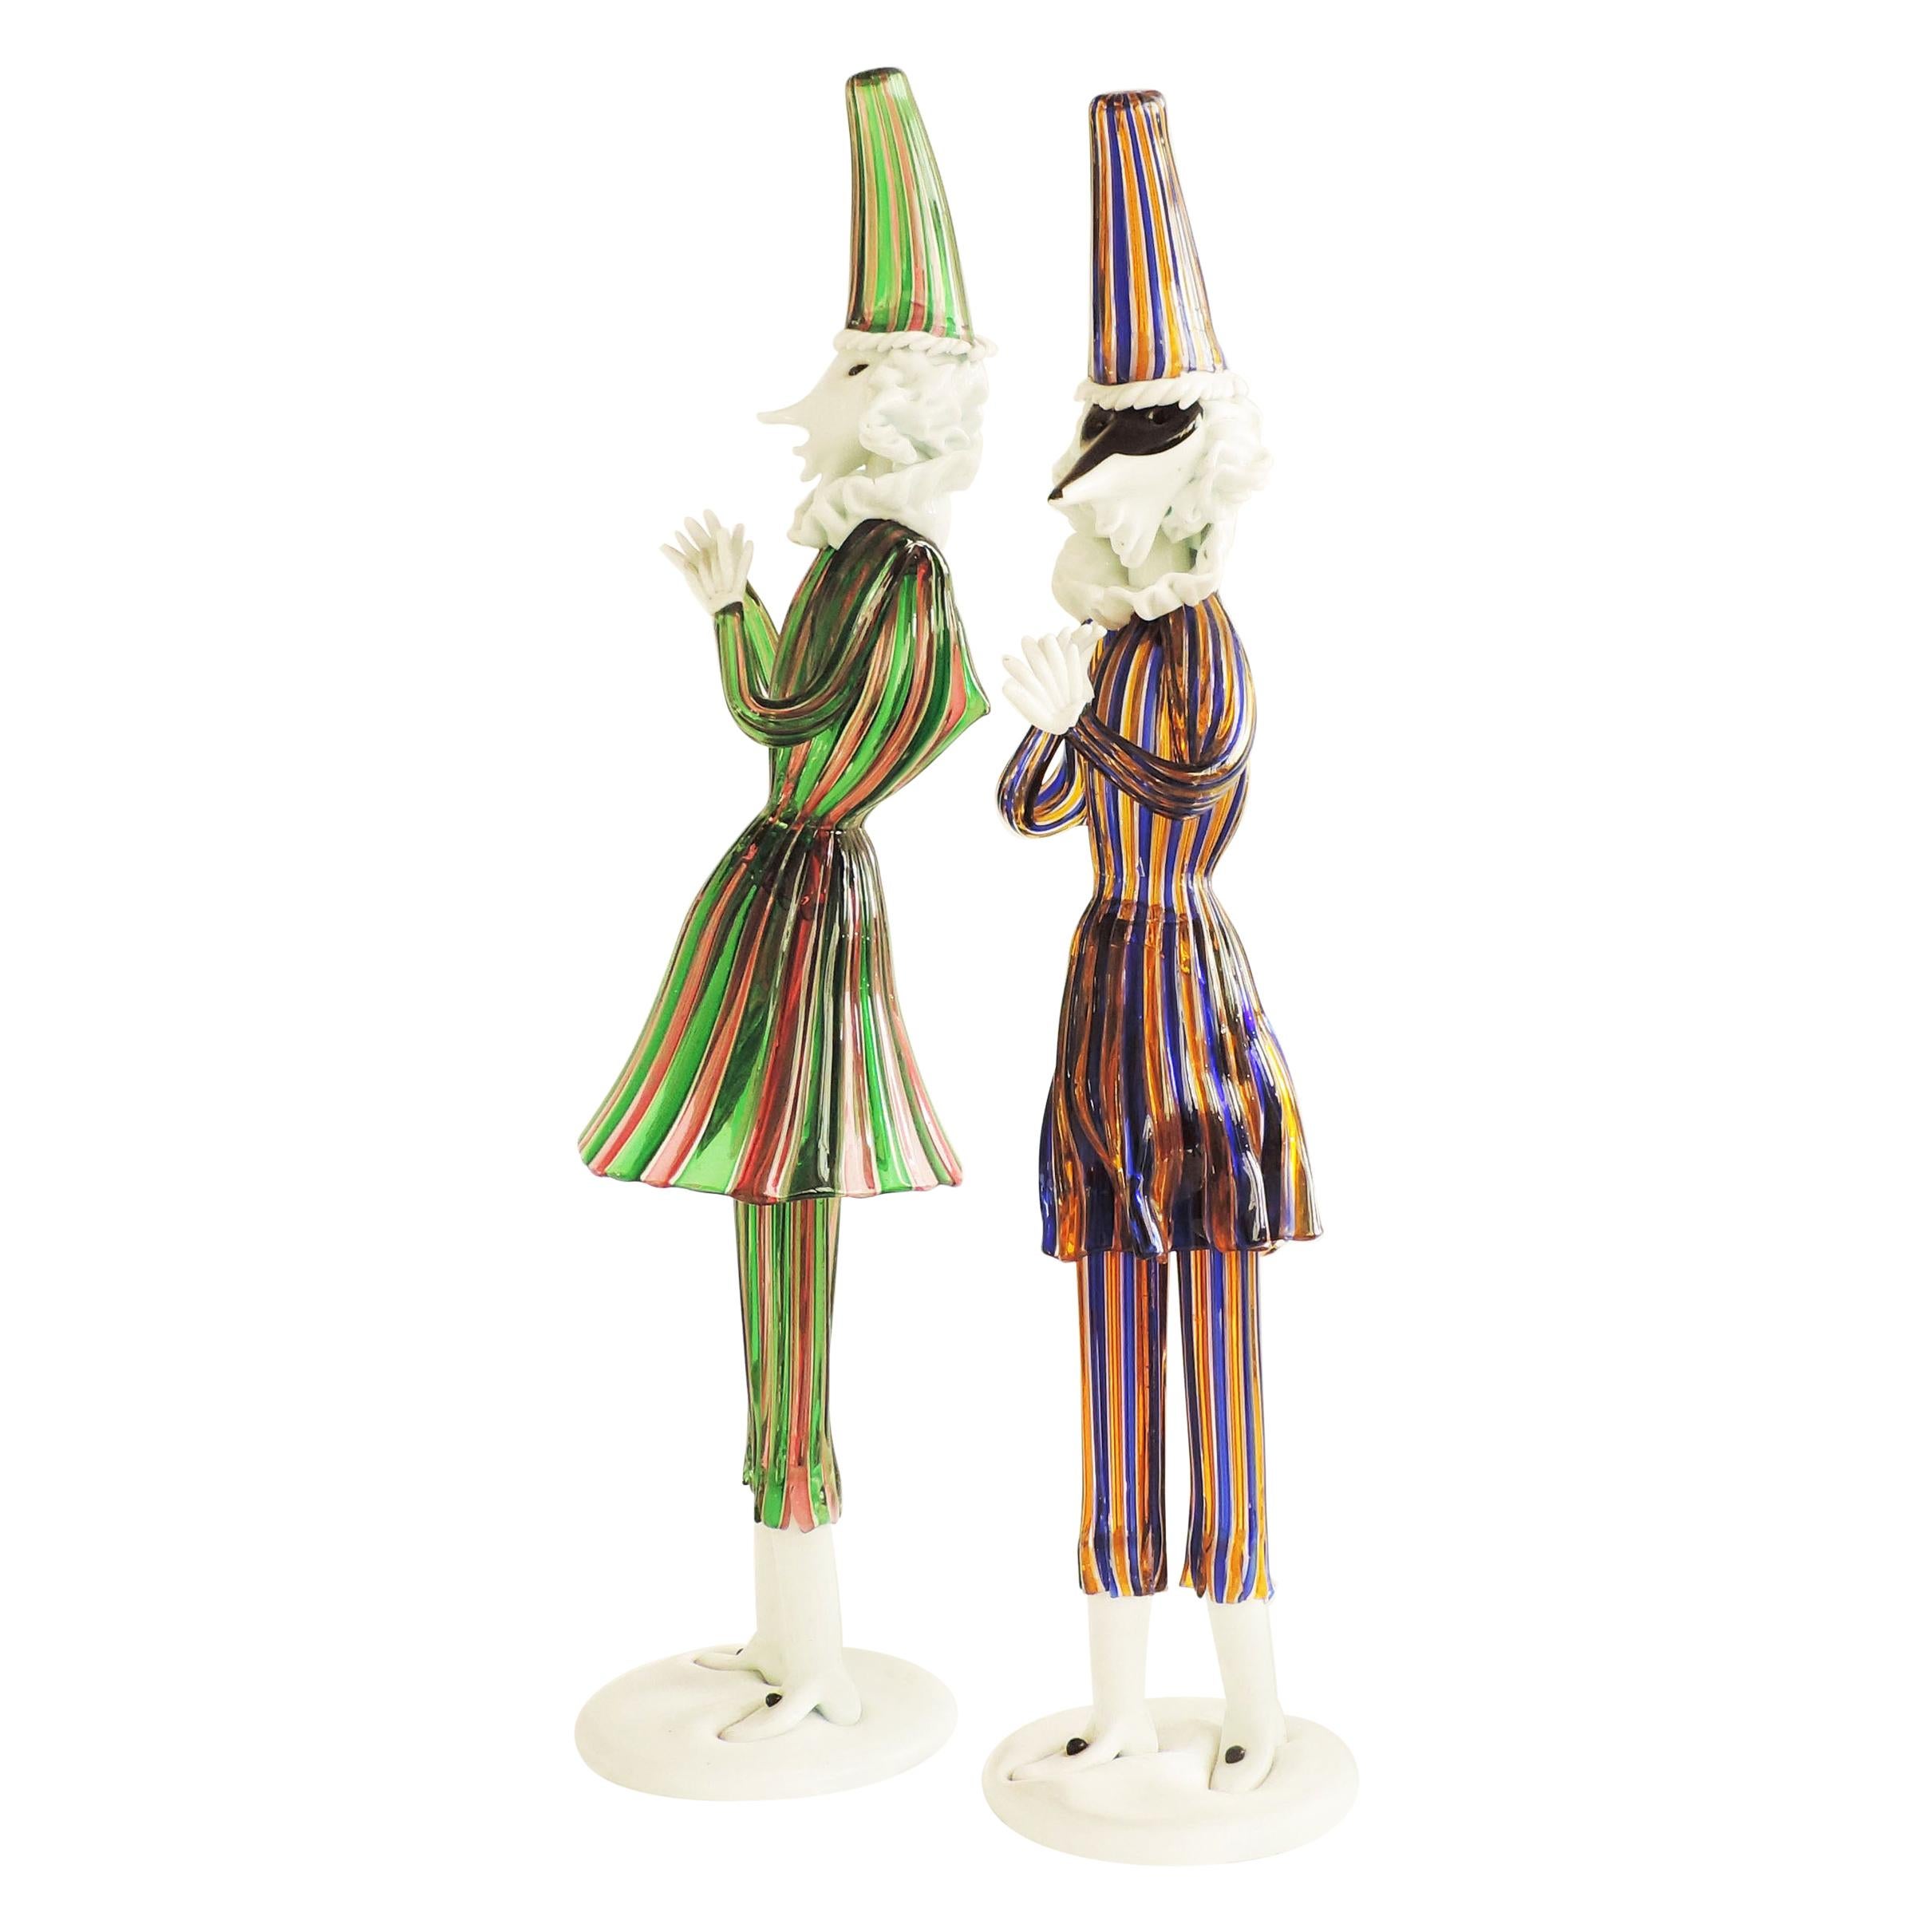 Splendid Pair of Murano Figurines, Italy 1950s For Sale